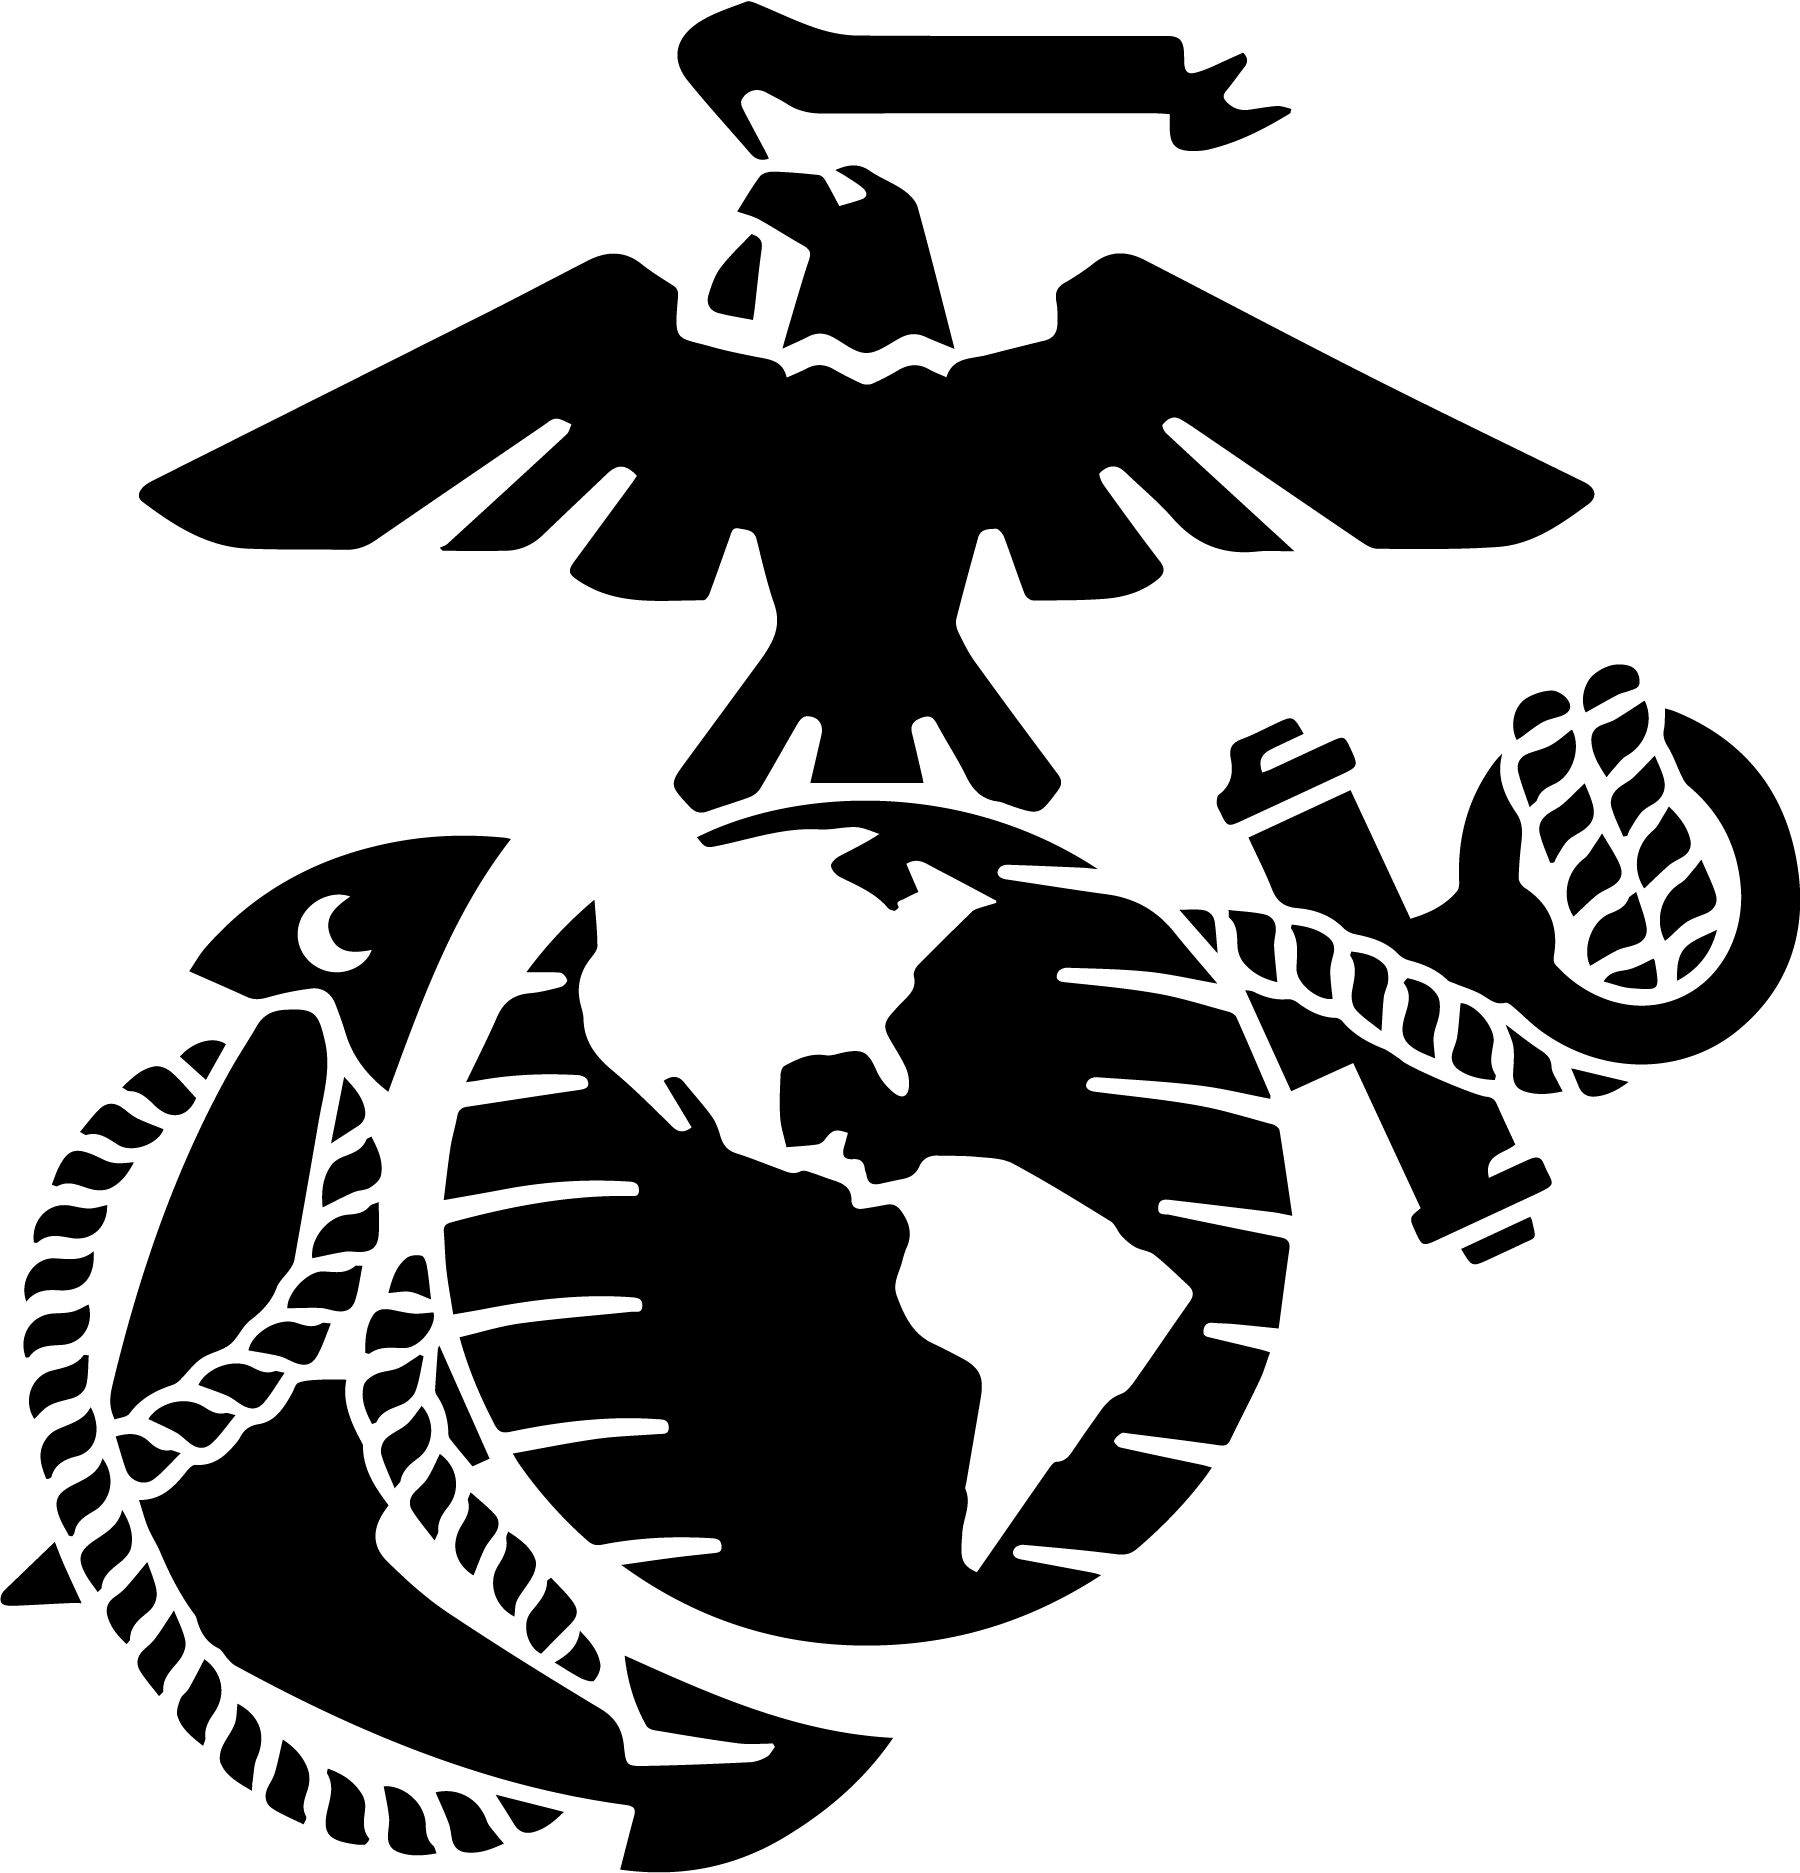 Military Marines Logo - Military Logos Vector, Navy, Air Force, Marines, Coast Guard